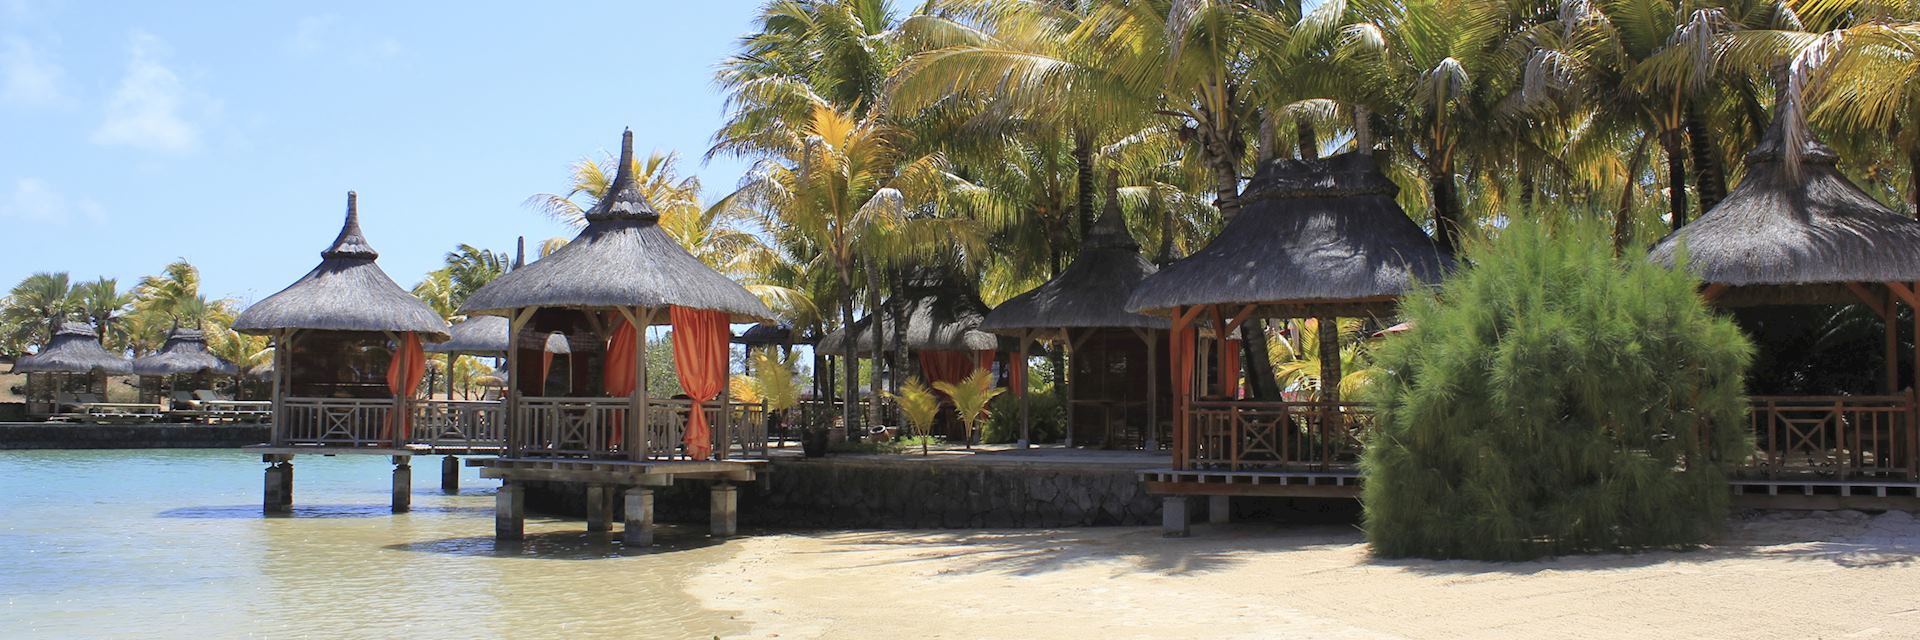 Beach huts in Mauritius